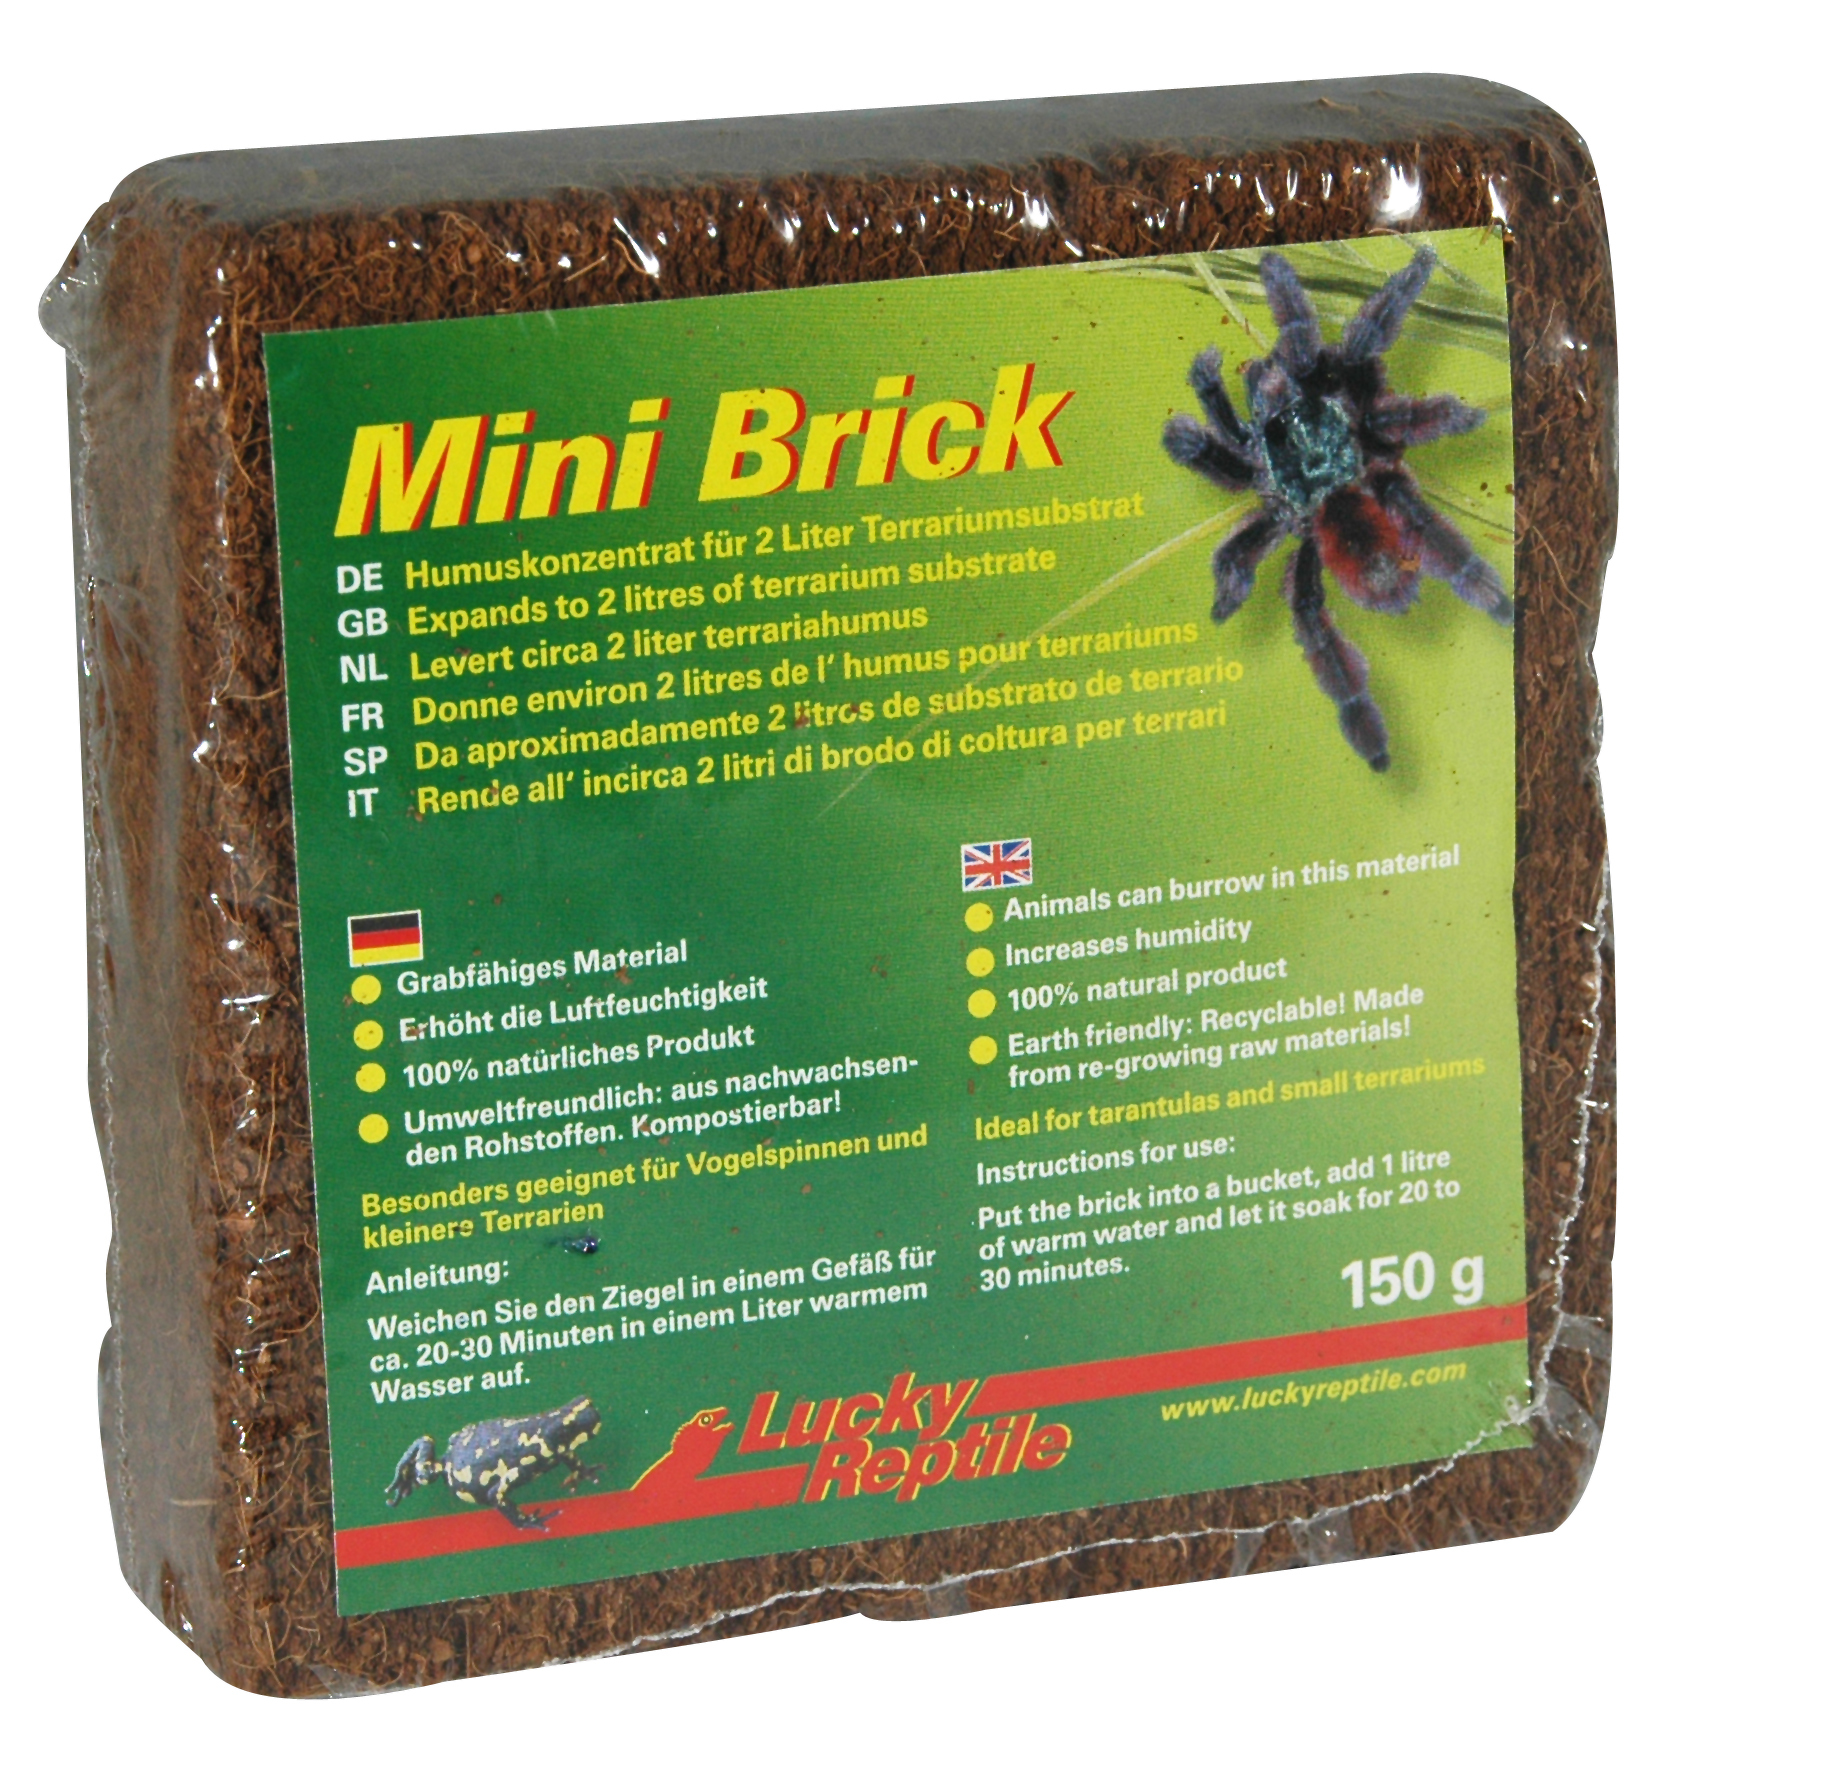 Mini Brick 150 g